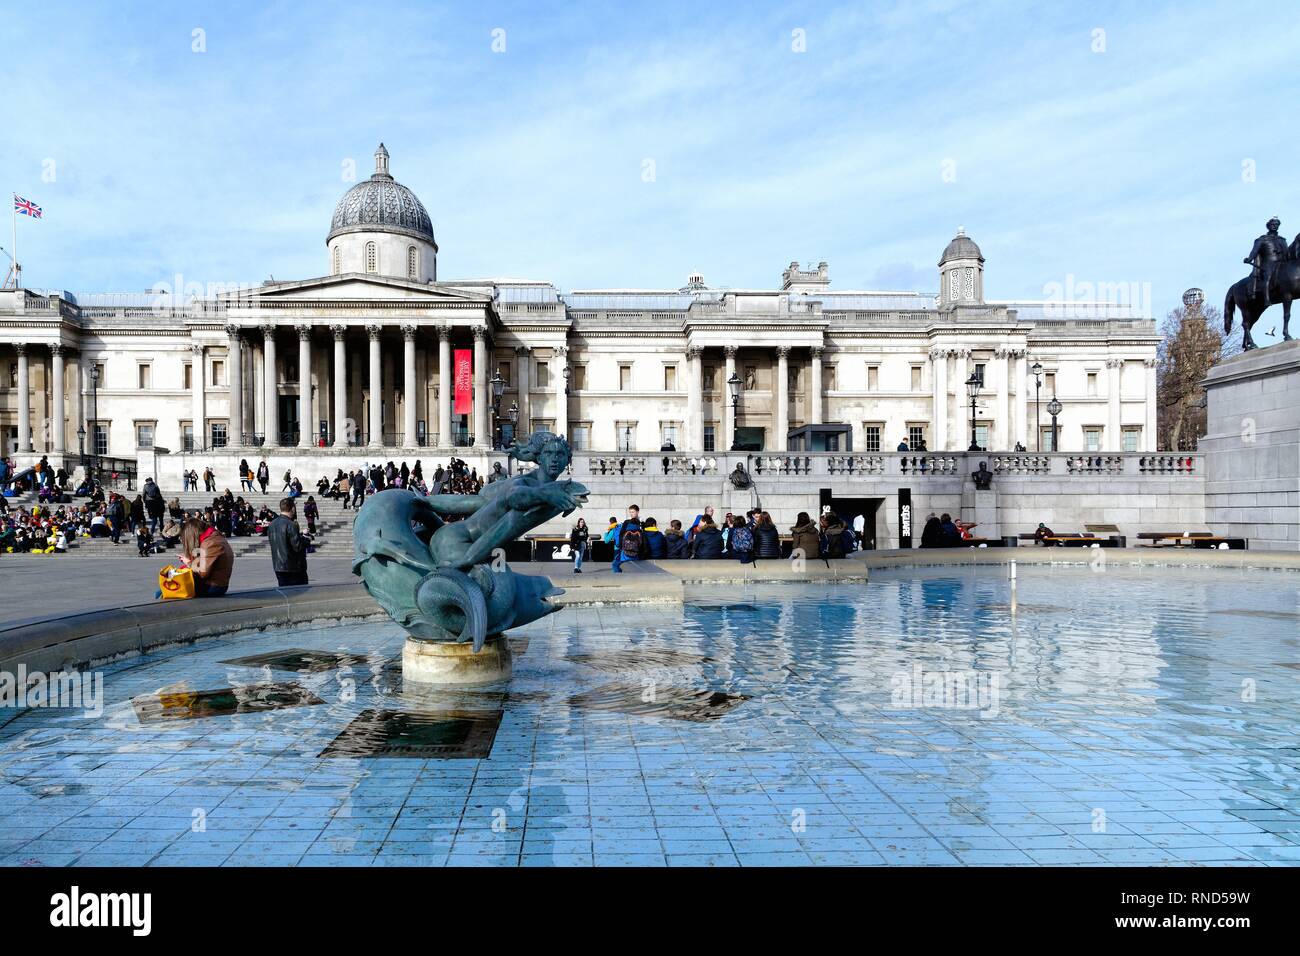 The National Art Gallery Trafalgar Square Central London England UK Stock Photo